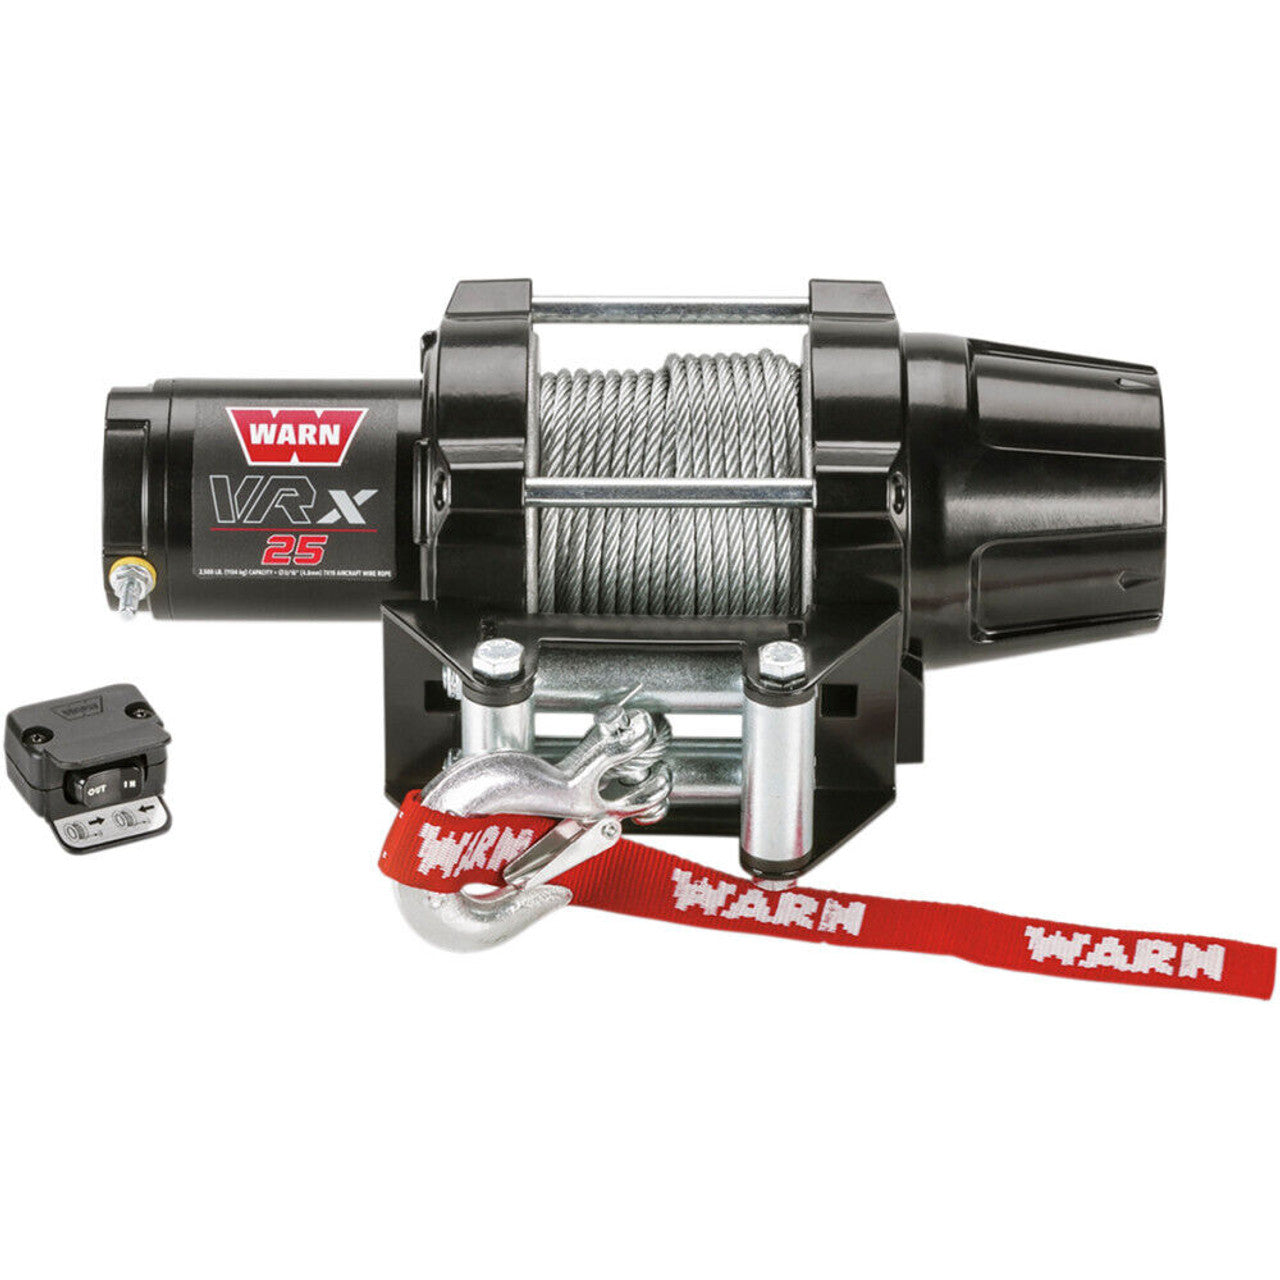 WARN VRX 25 ATV UTV Powersports Electric Winch 2500lb 12V - Steel Rope